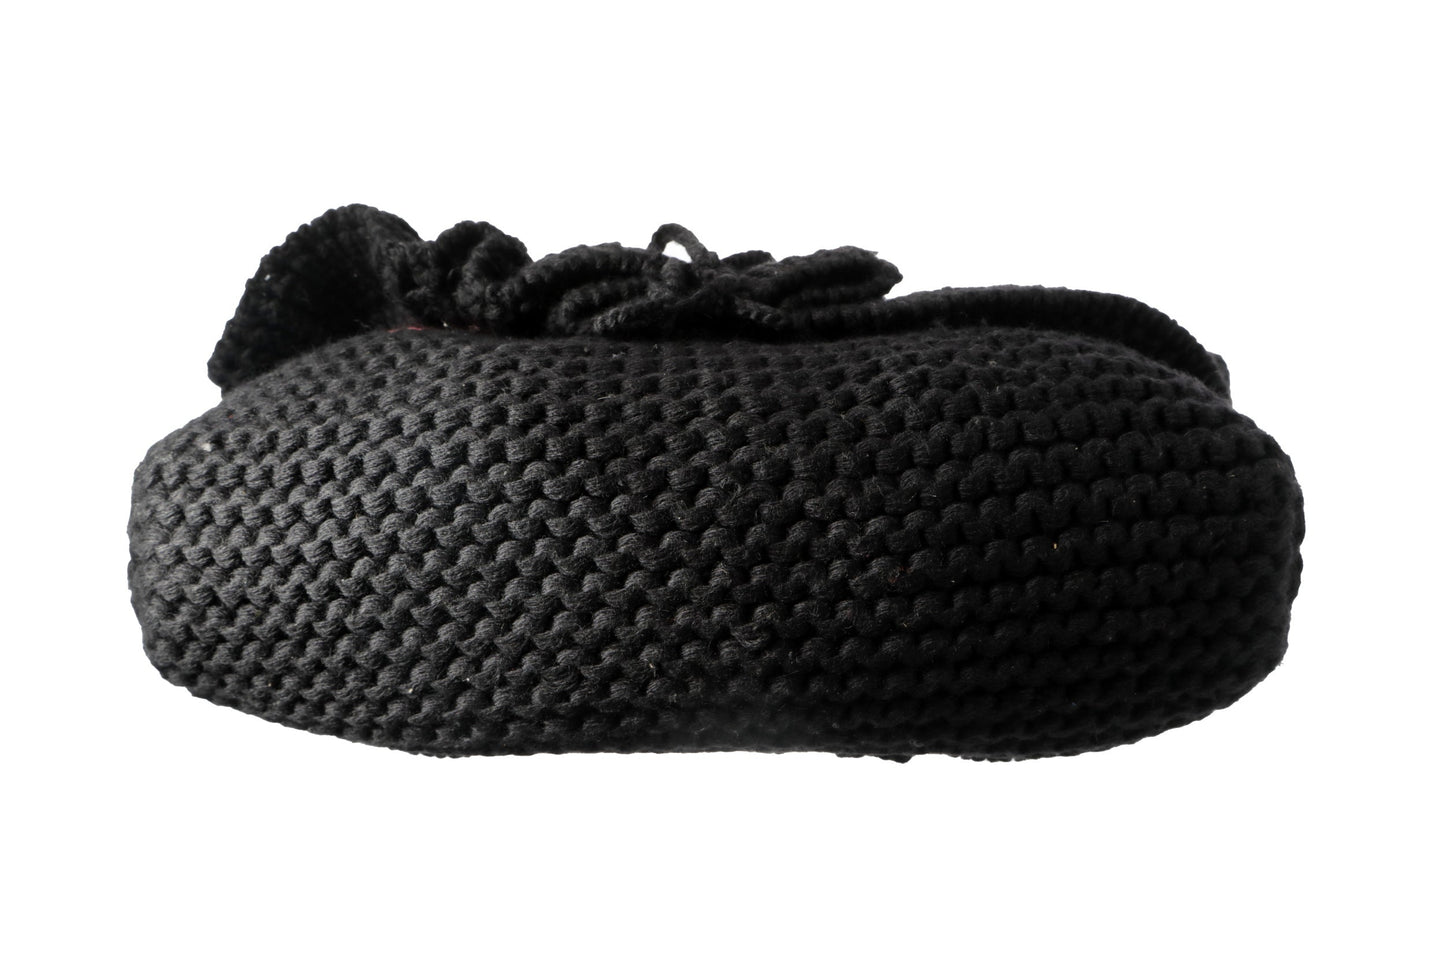 Fendi Chef bag in black knit